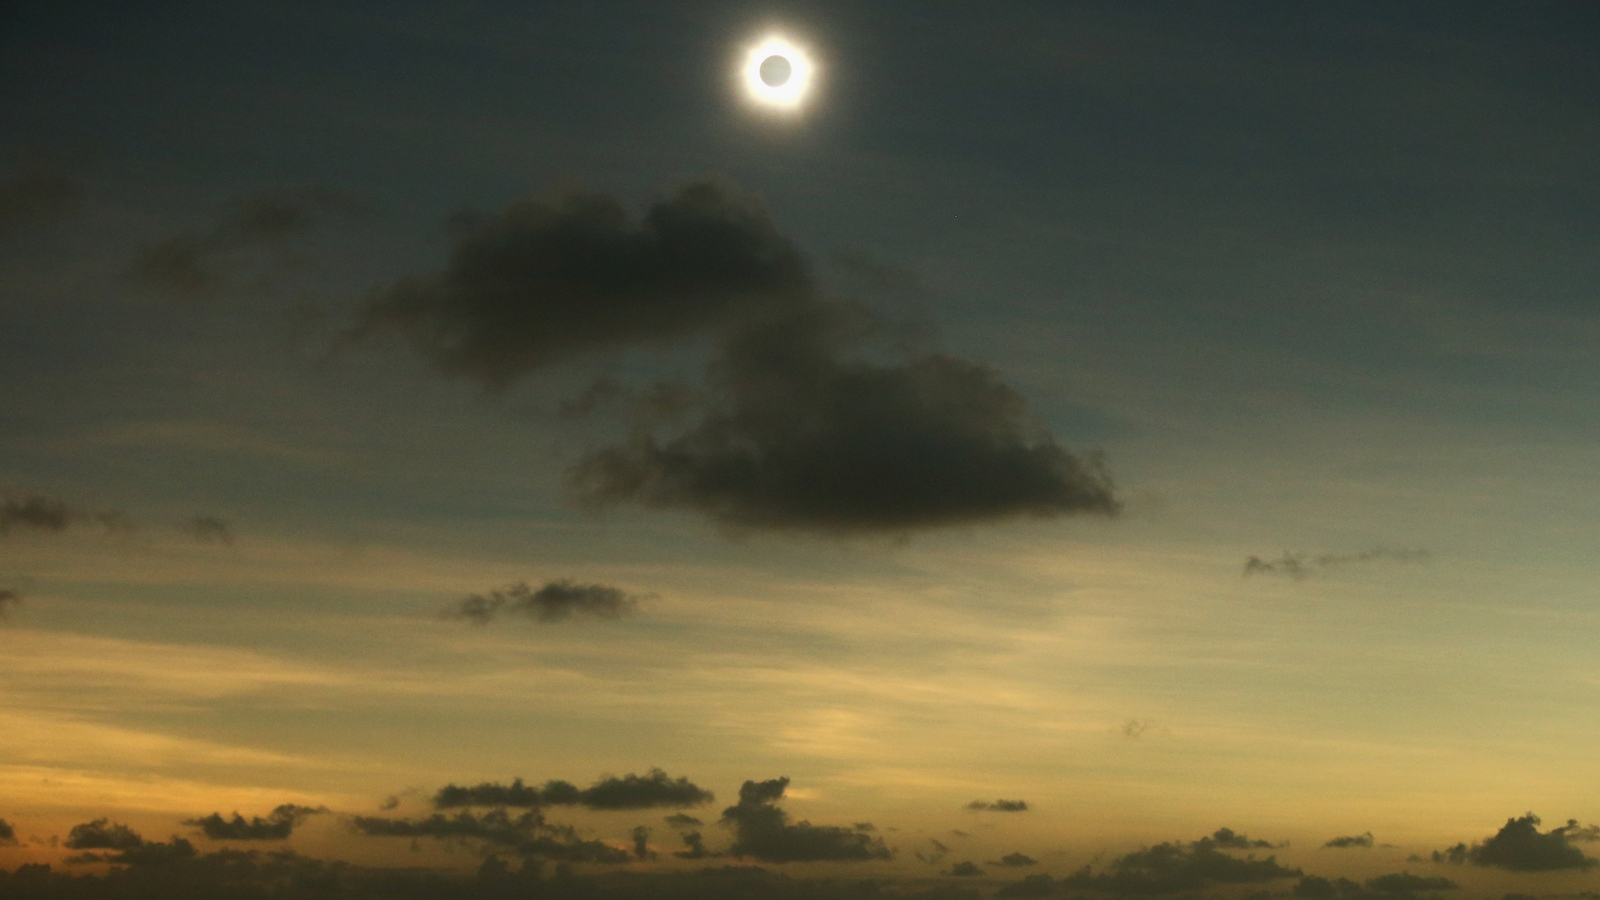 Rare full solar eclipse in Australia